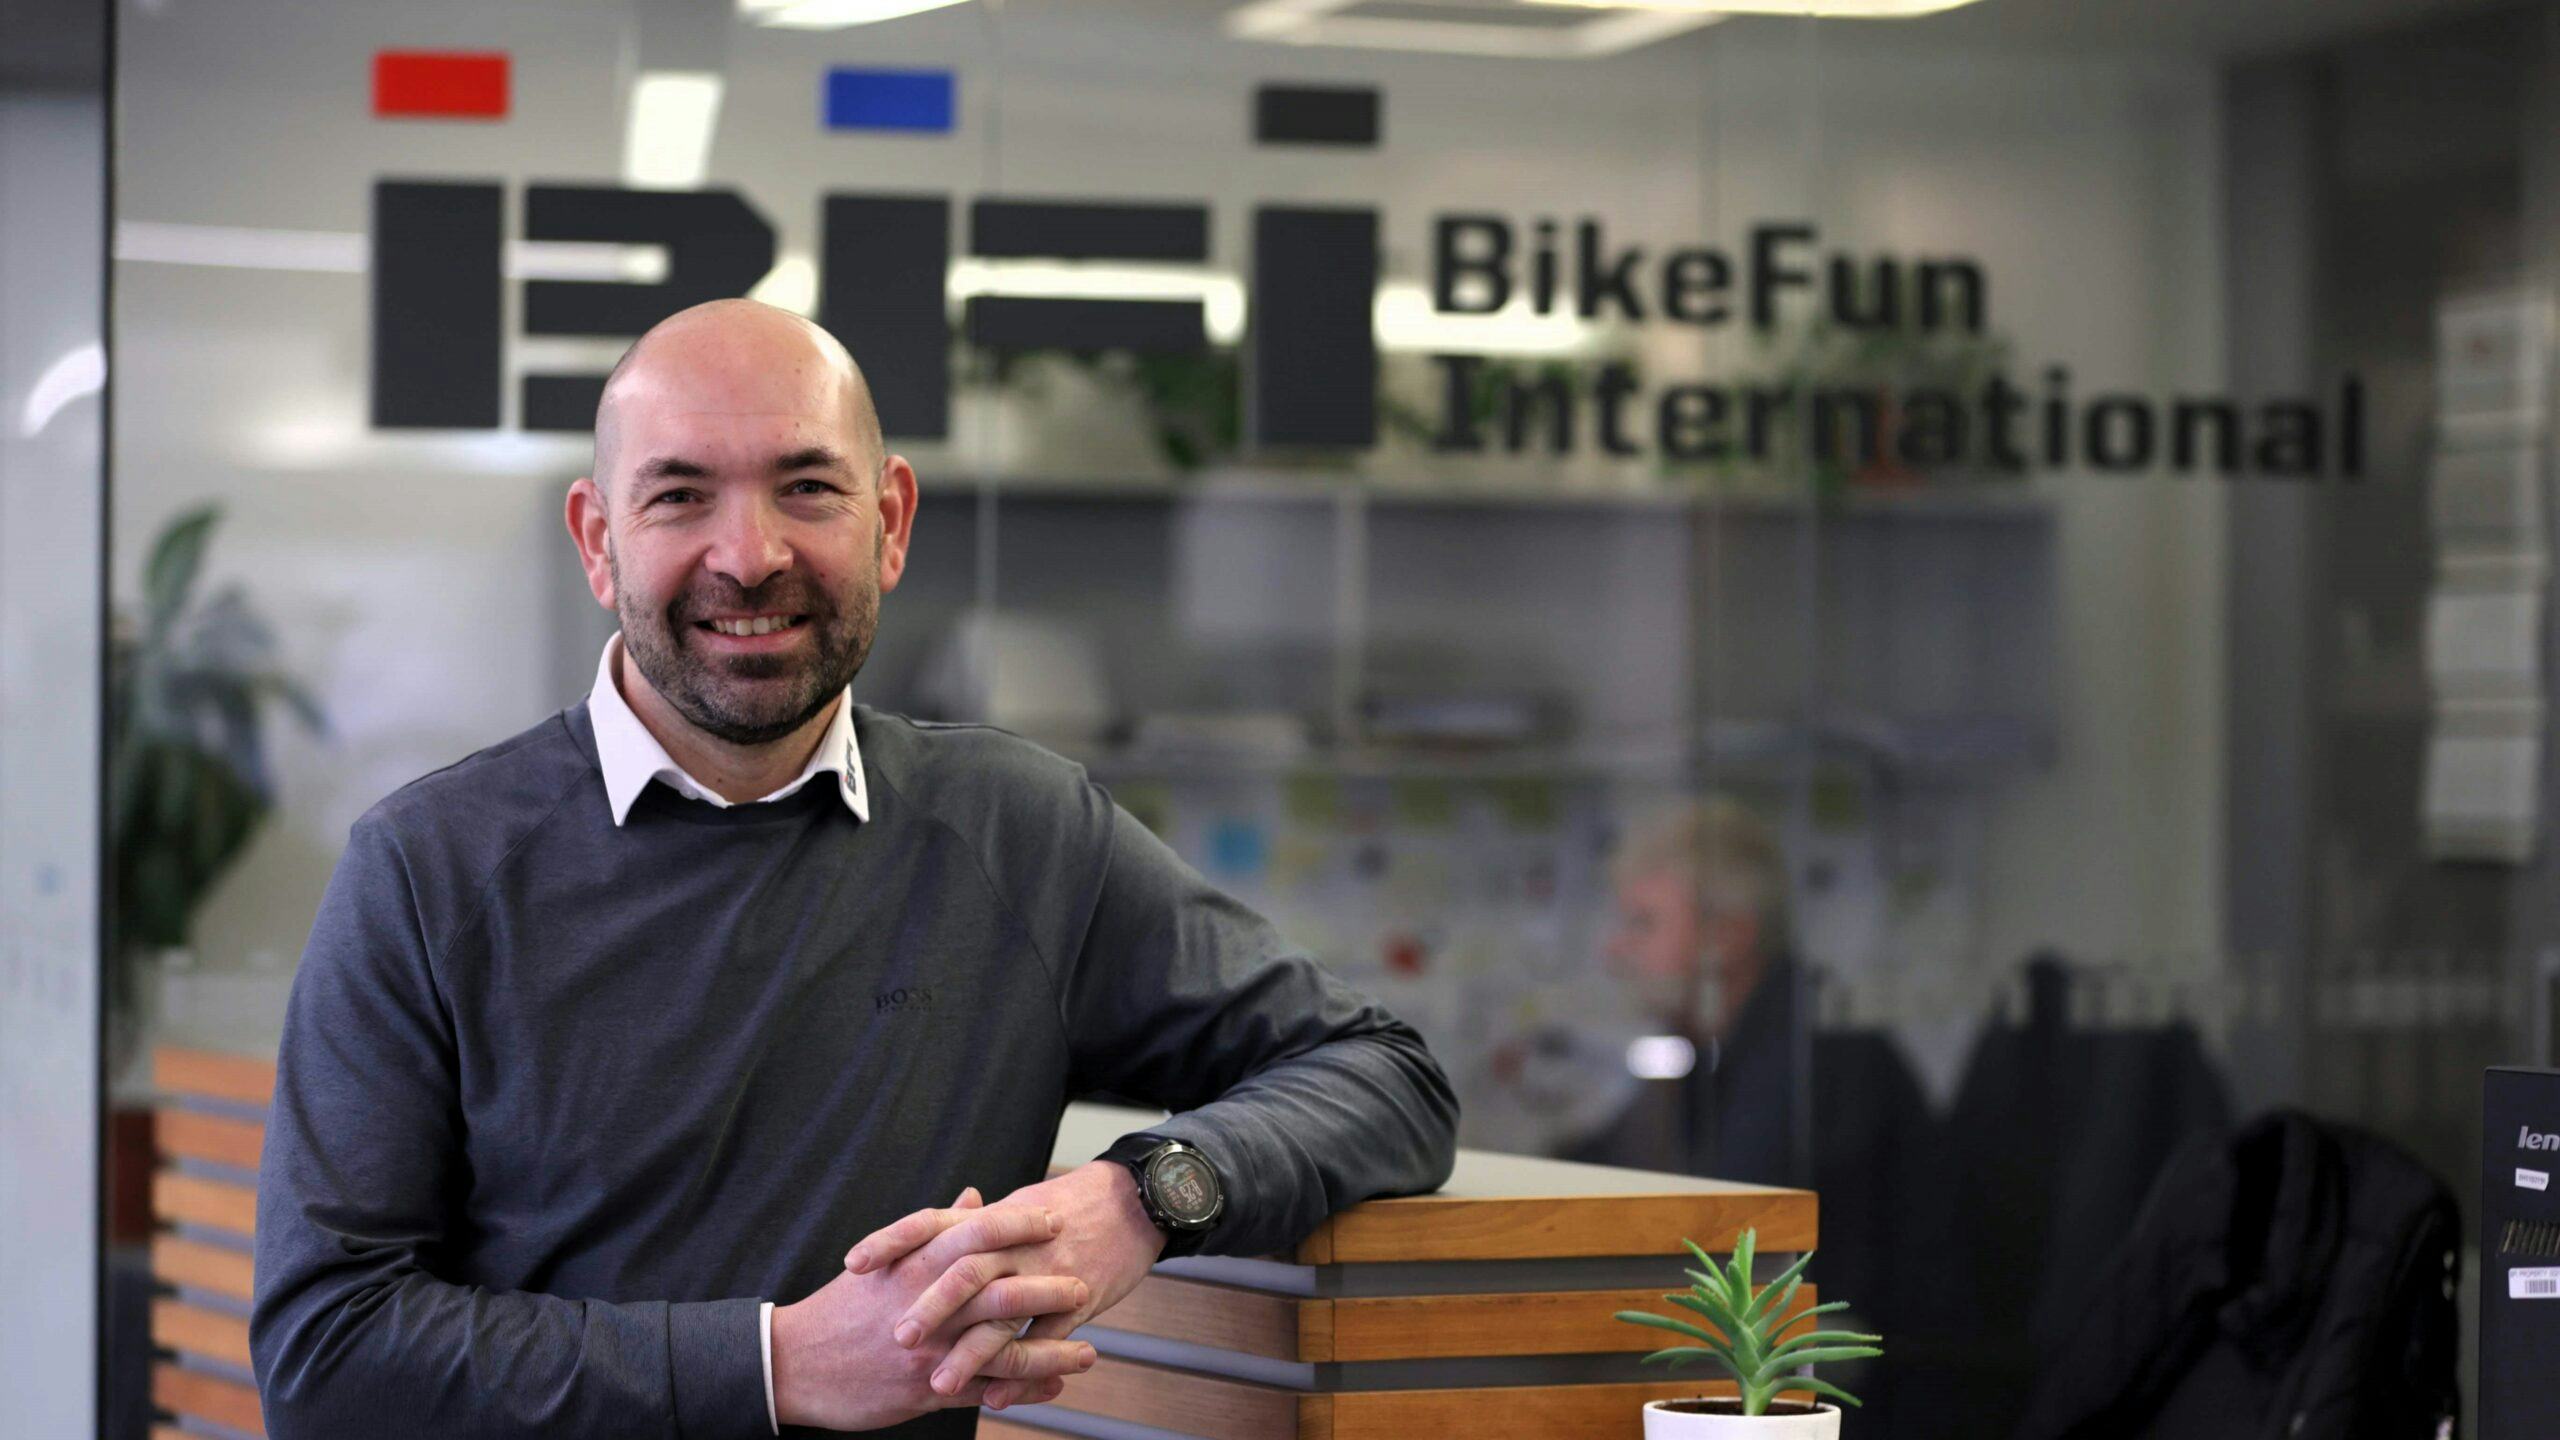 René Gasser為Bike Fun International新任執行長。照片來源／BFI